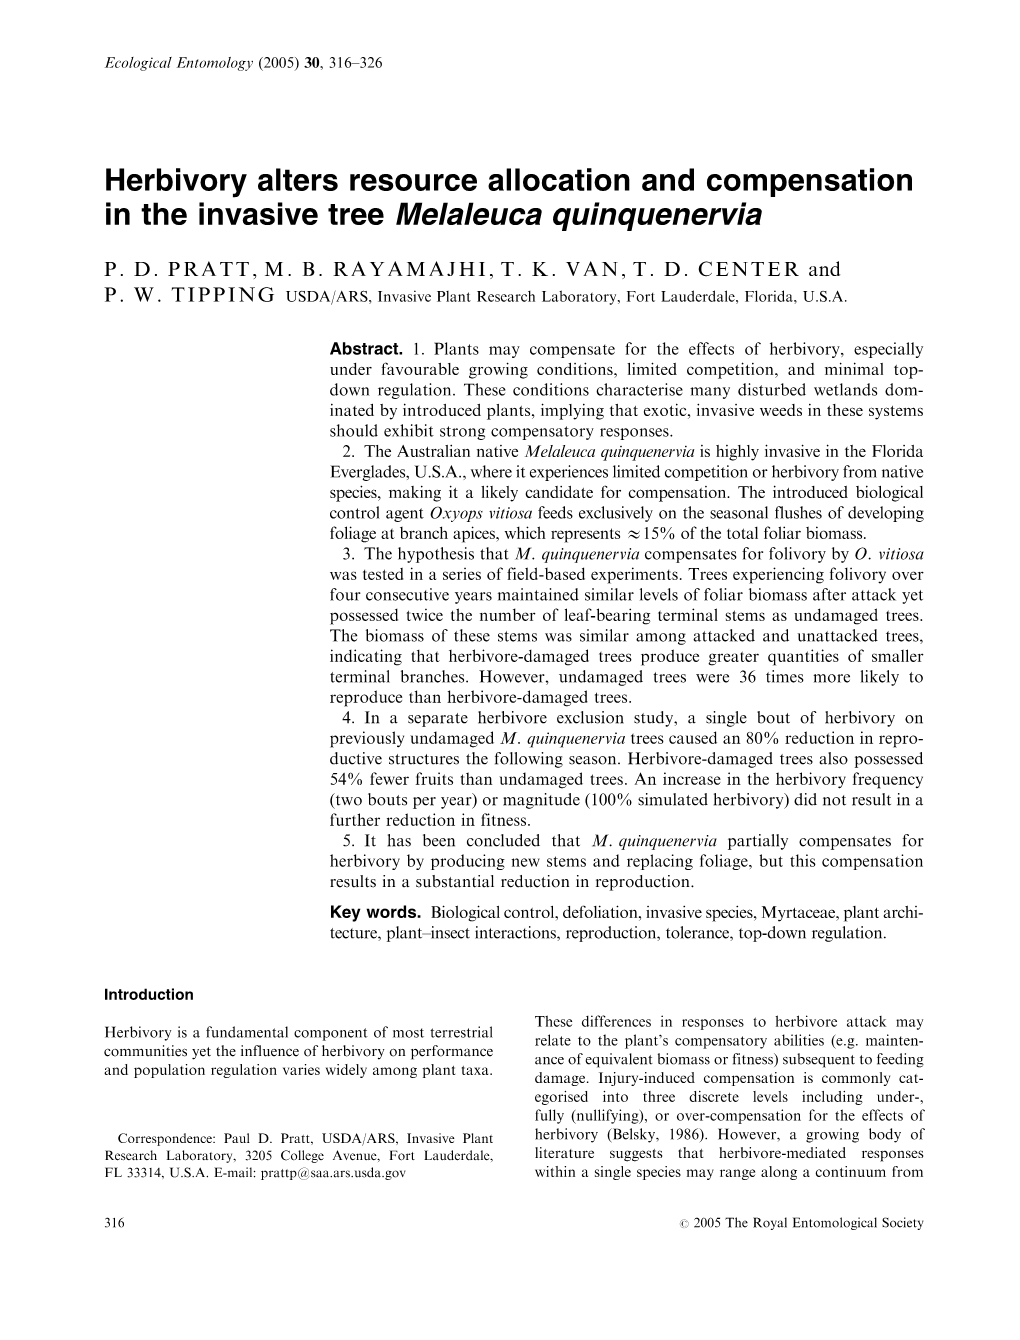 Herbivory Alters Resource Allocation and Compensation in the Invasive Tree Melaleuca Quinquenervia